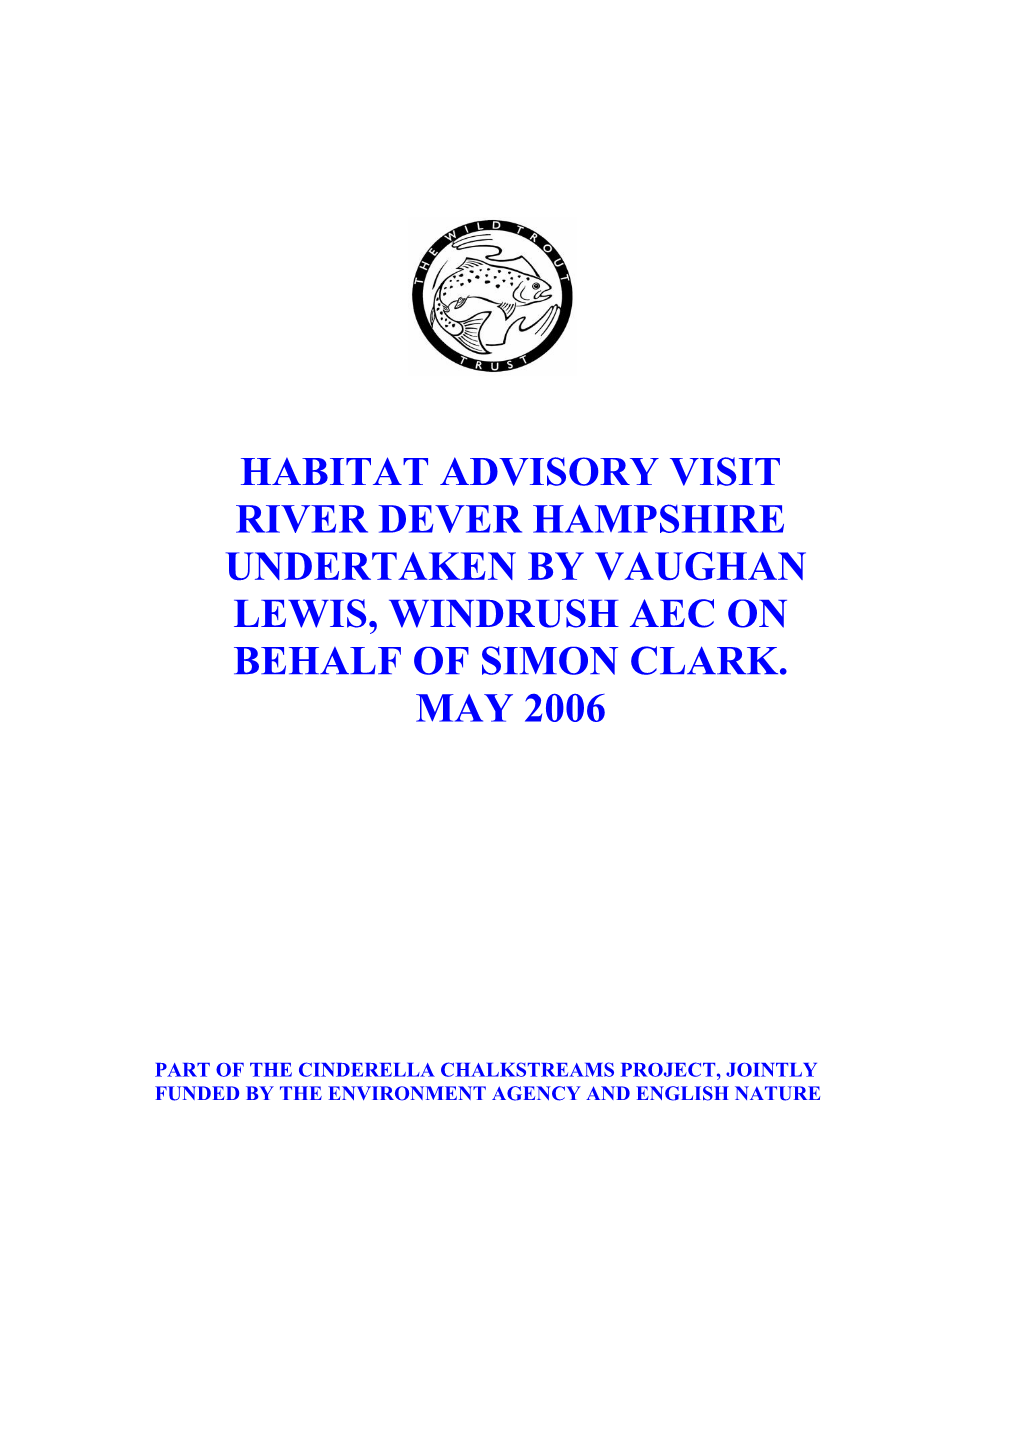 Habitat Advisory Visit River Dever Hampshire Undertaken by Vaughan Lewis, Windrush Aec on Behalf of Simon Clark. May 2006